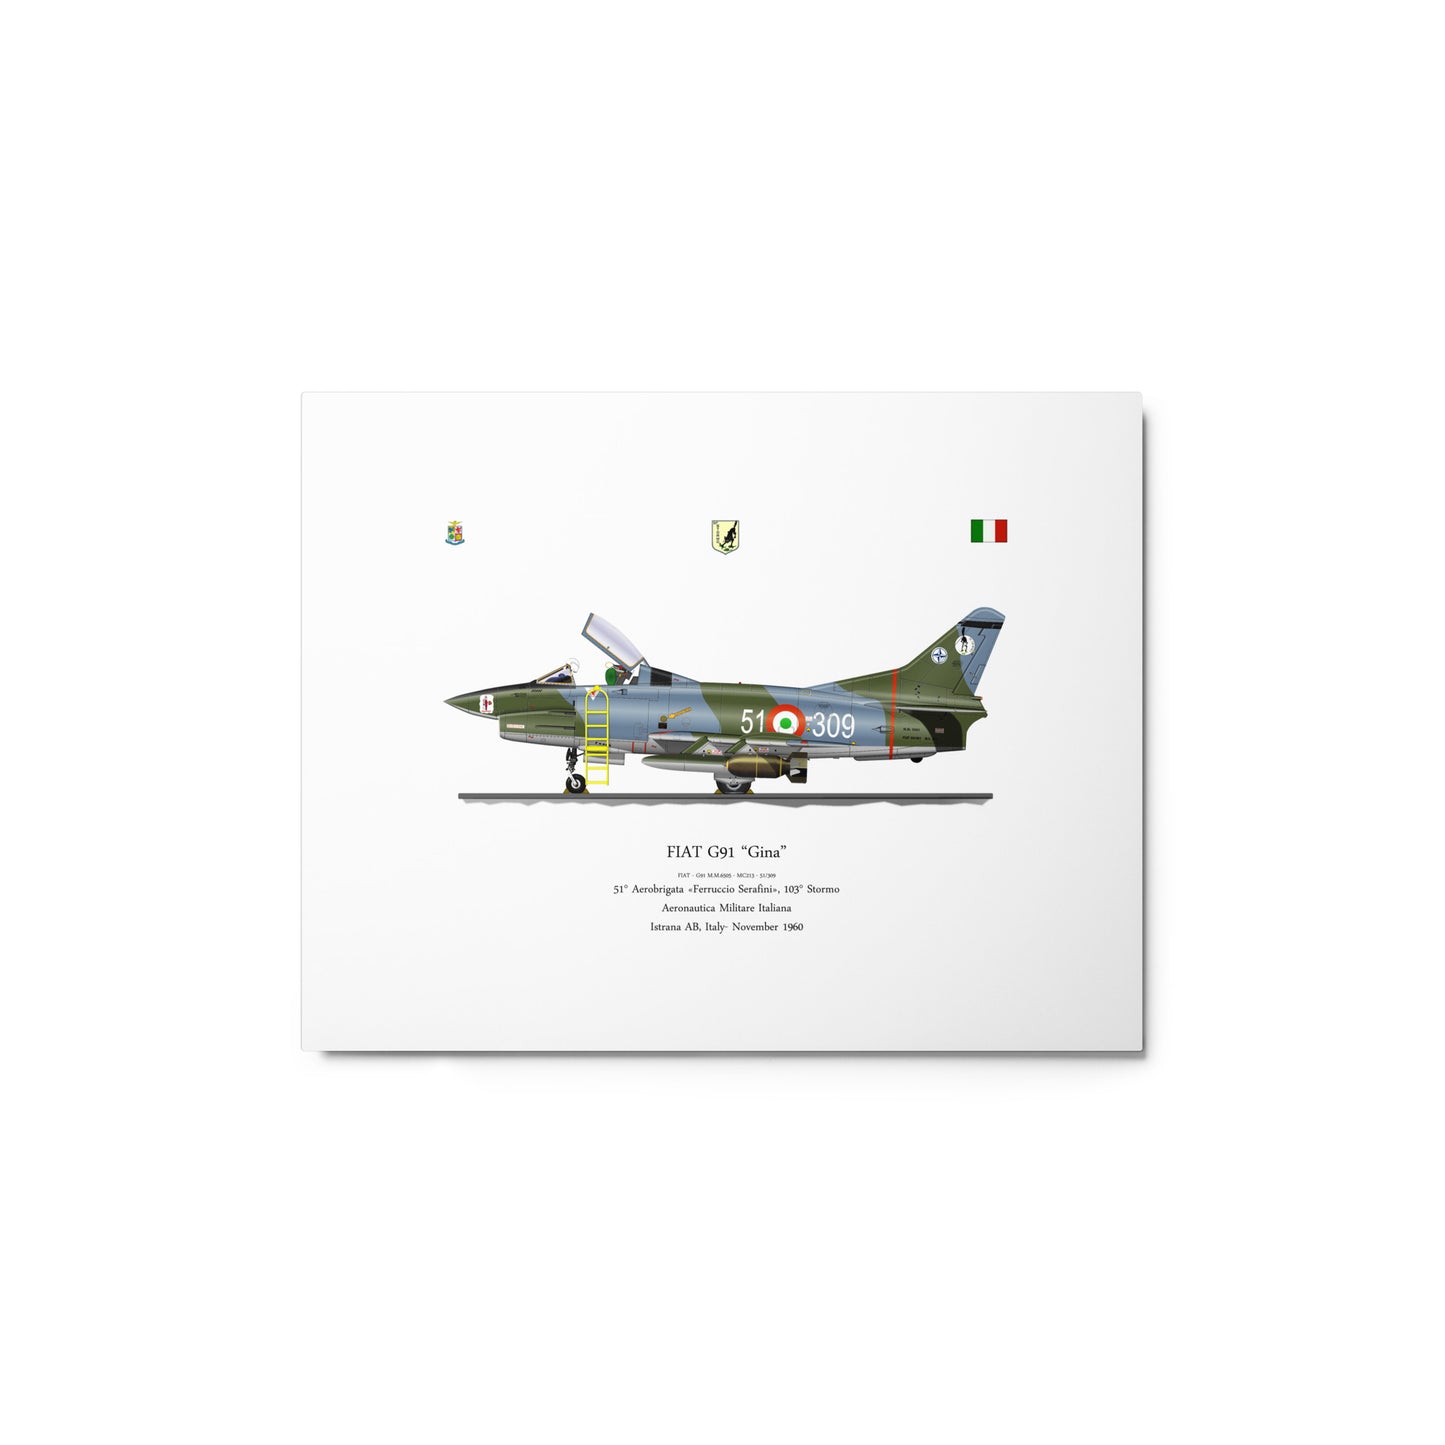 Antique aircraft-Italy Aeritalia G91 1960 By Gianfranco Lanini